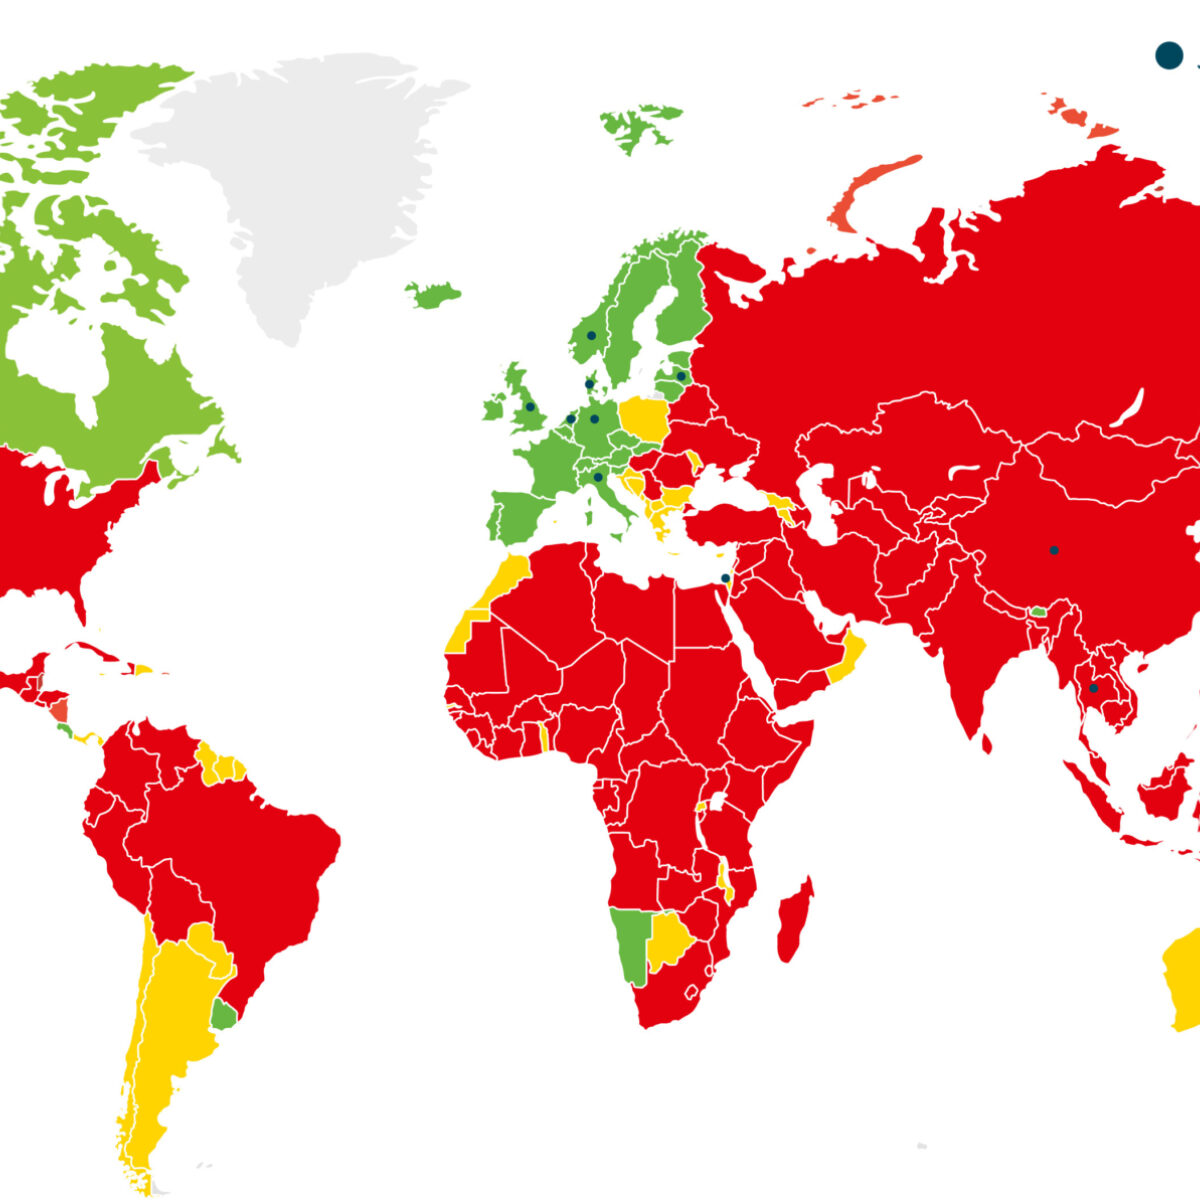 Jets illustration map world borders risk 3 colours